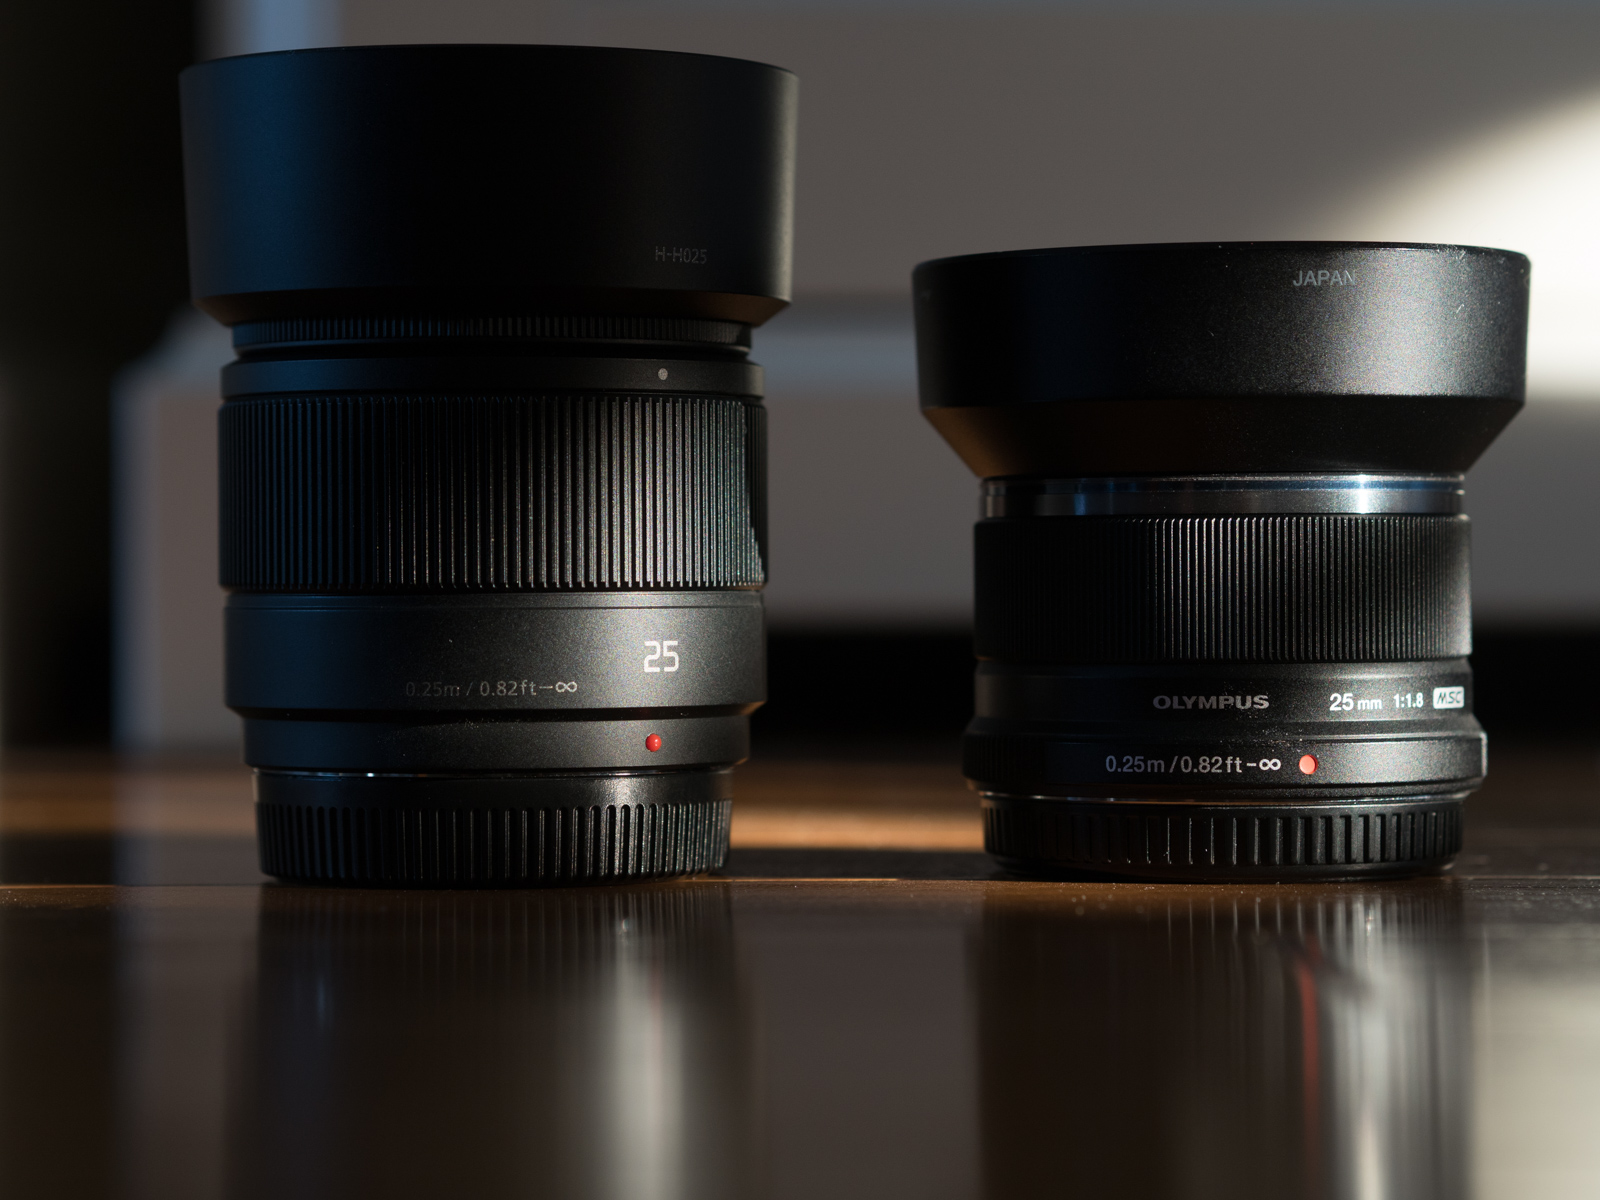 Panasonic Lumix 25mm 1.7 Review + images – 43rds Lenses | Peter Tsai Photography Blog